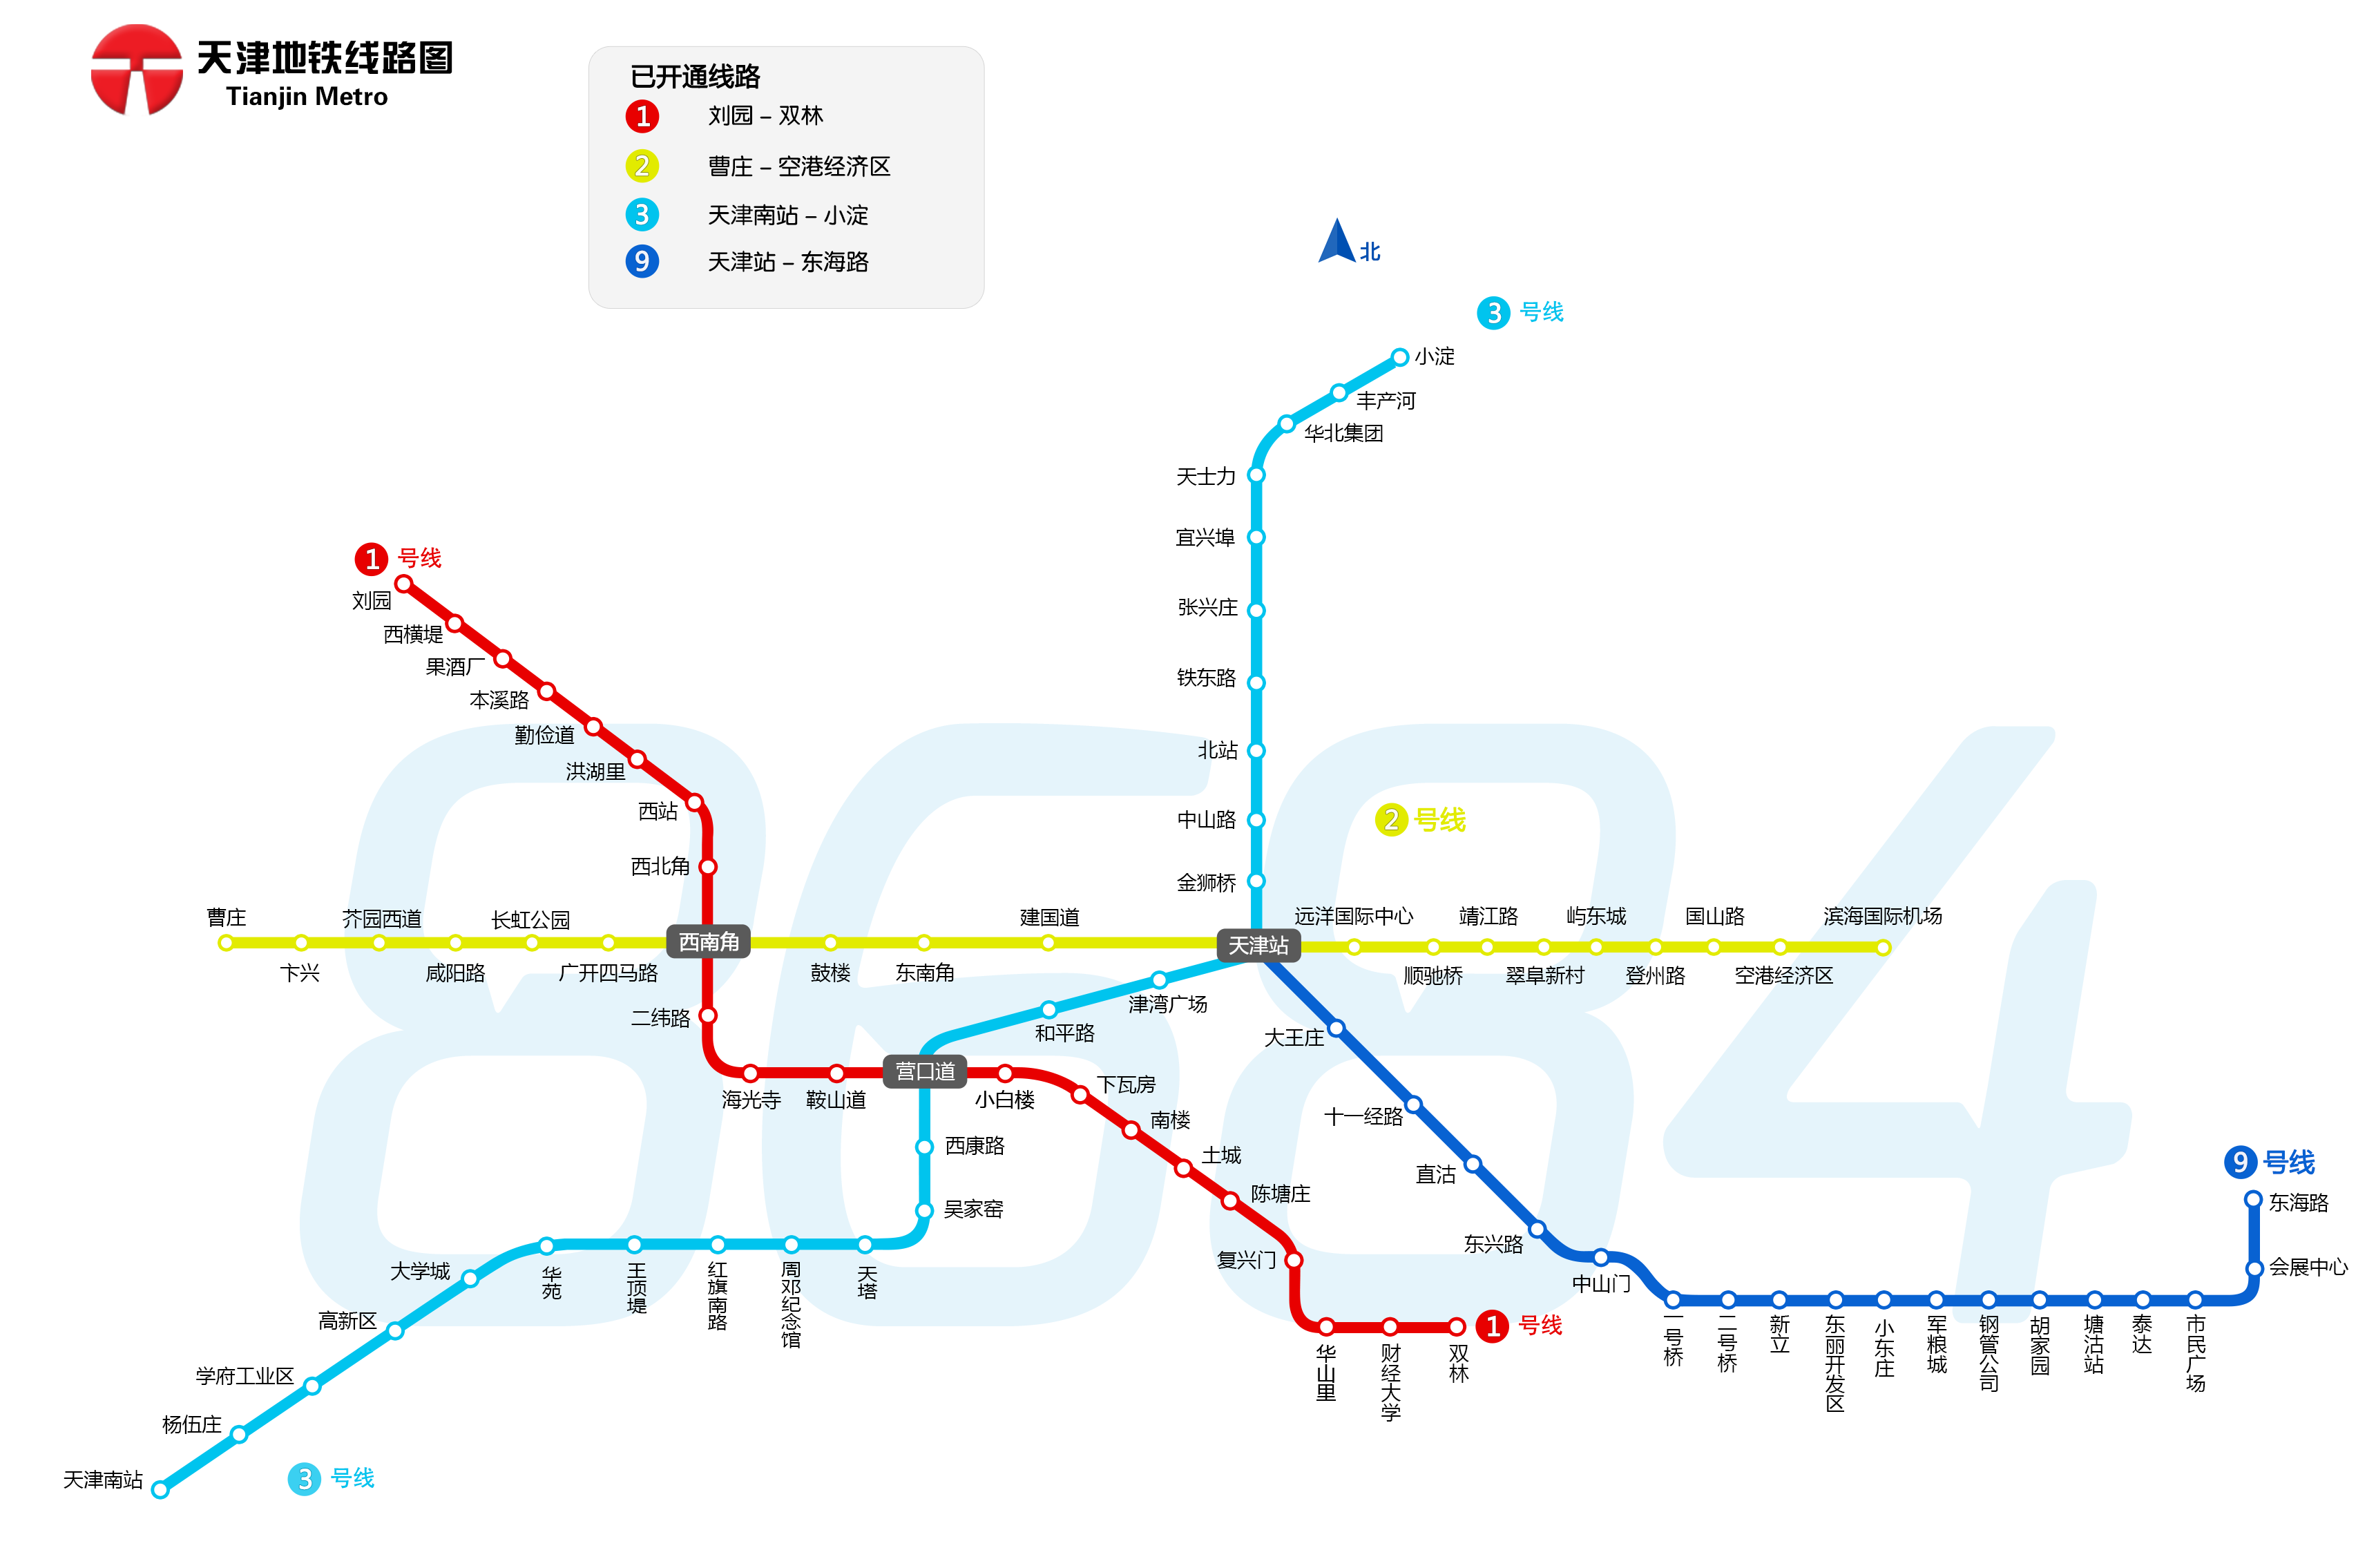 Korea Metro Map